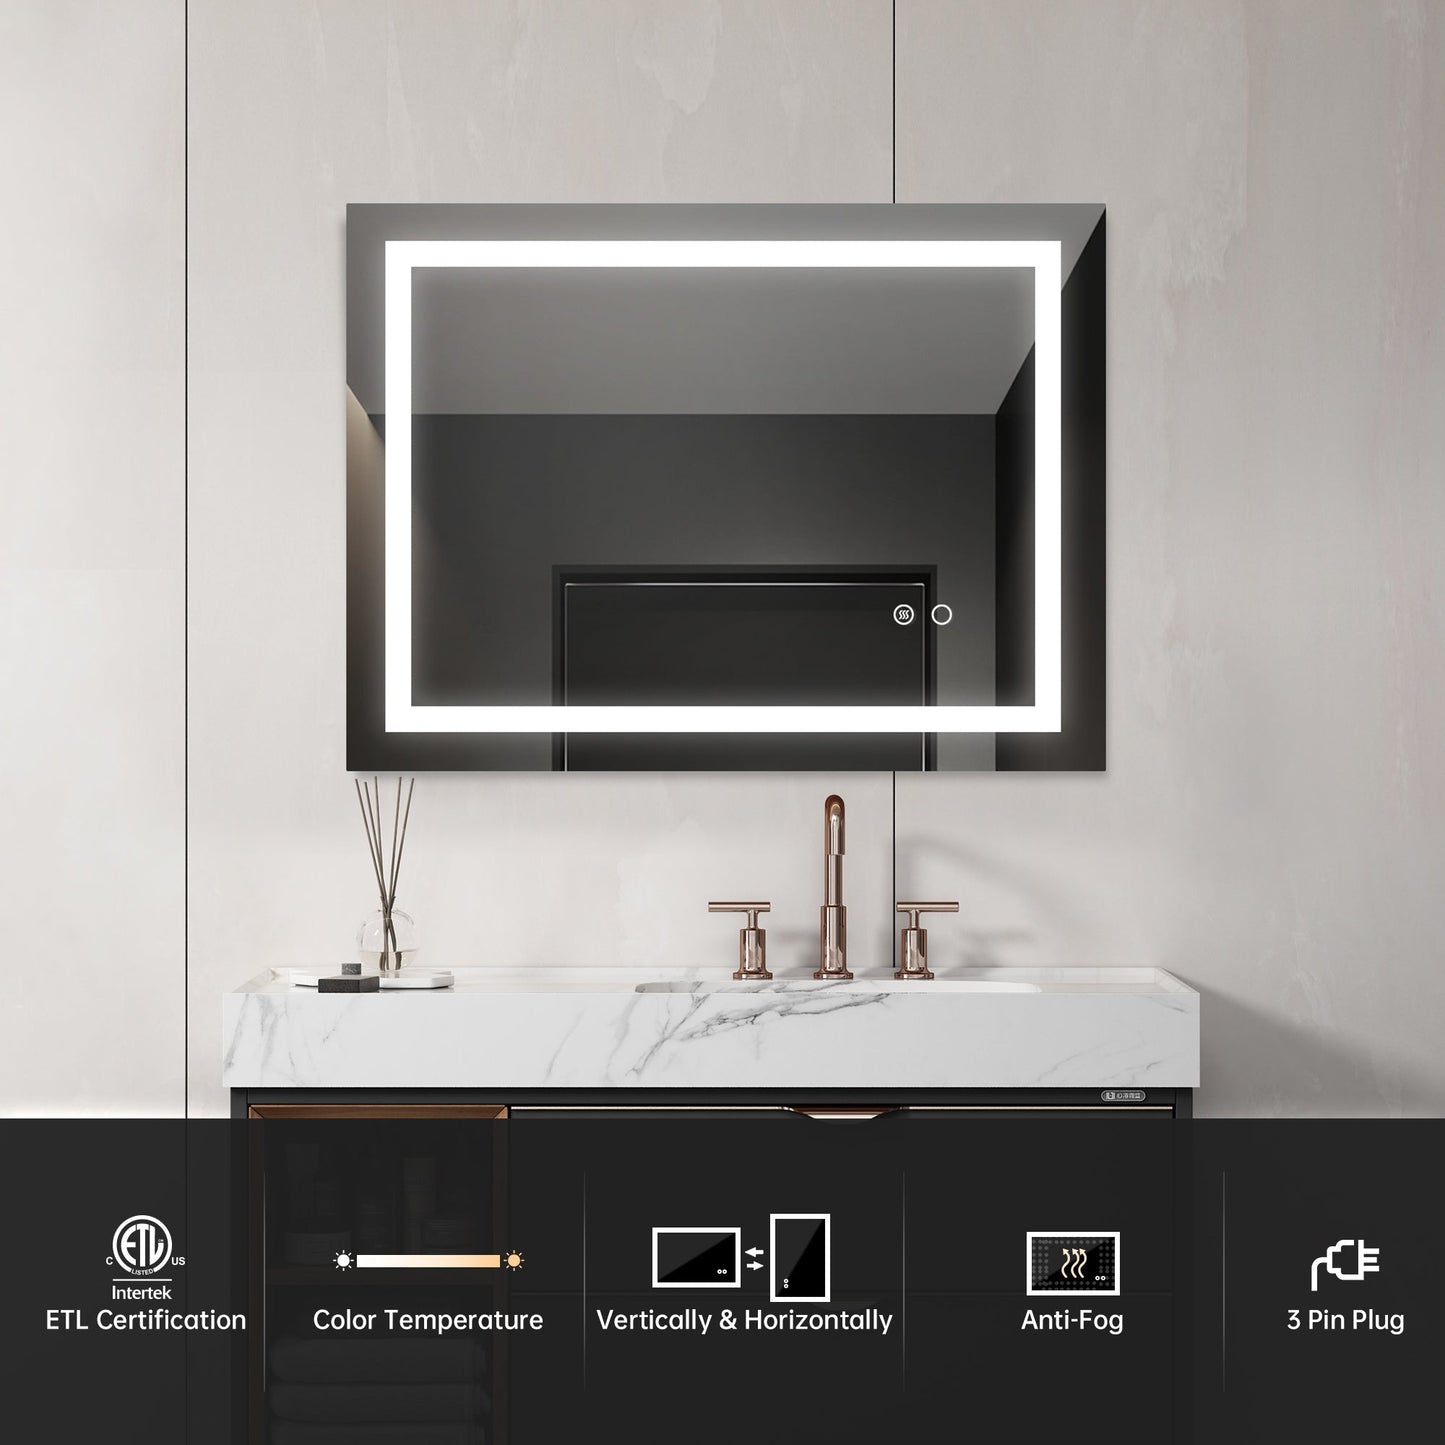 Anti-Fog Dimmable Touch Button LED Bathroom Mirror by Blak Hom